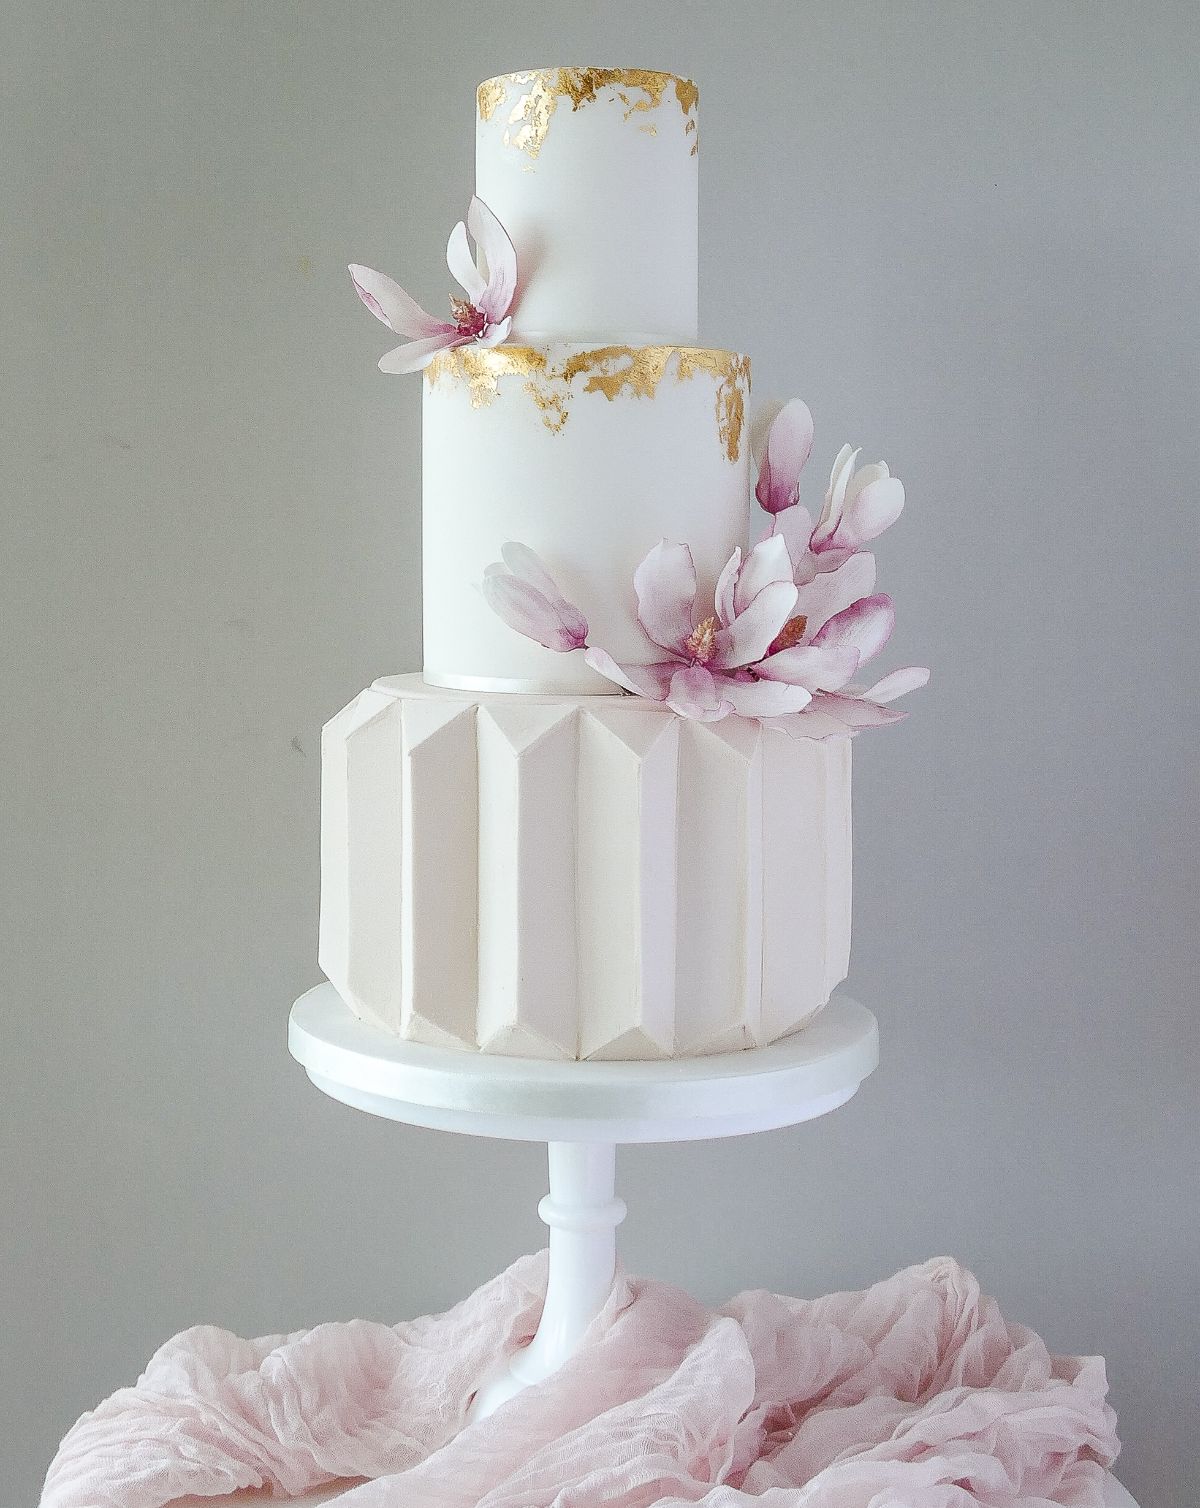 Wren Cake Design-Image-1